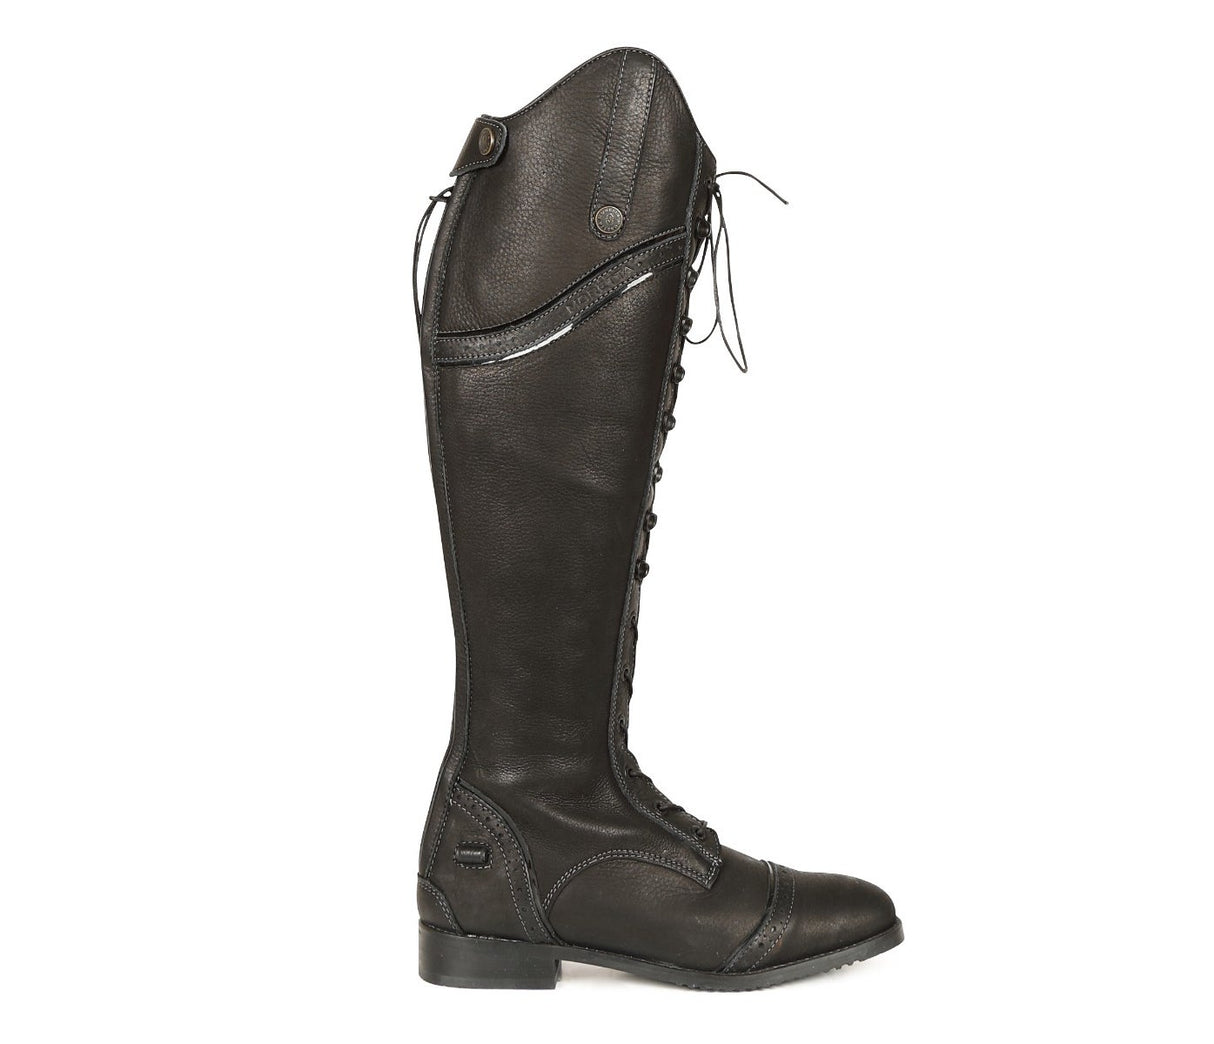 Shires Moretta Maddalena Riding Boots #colour_black